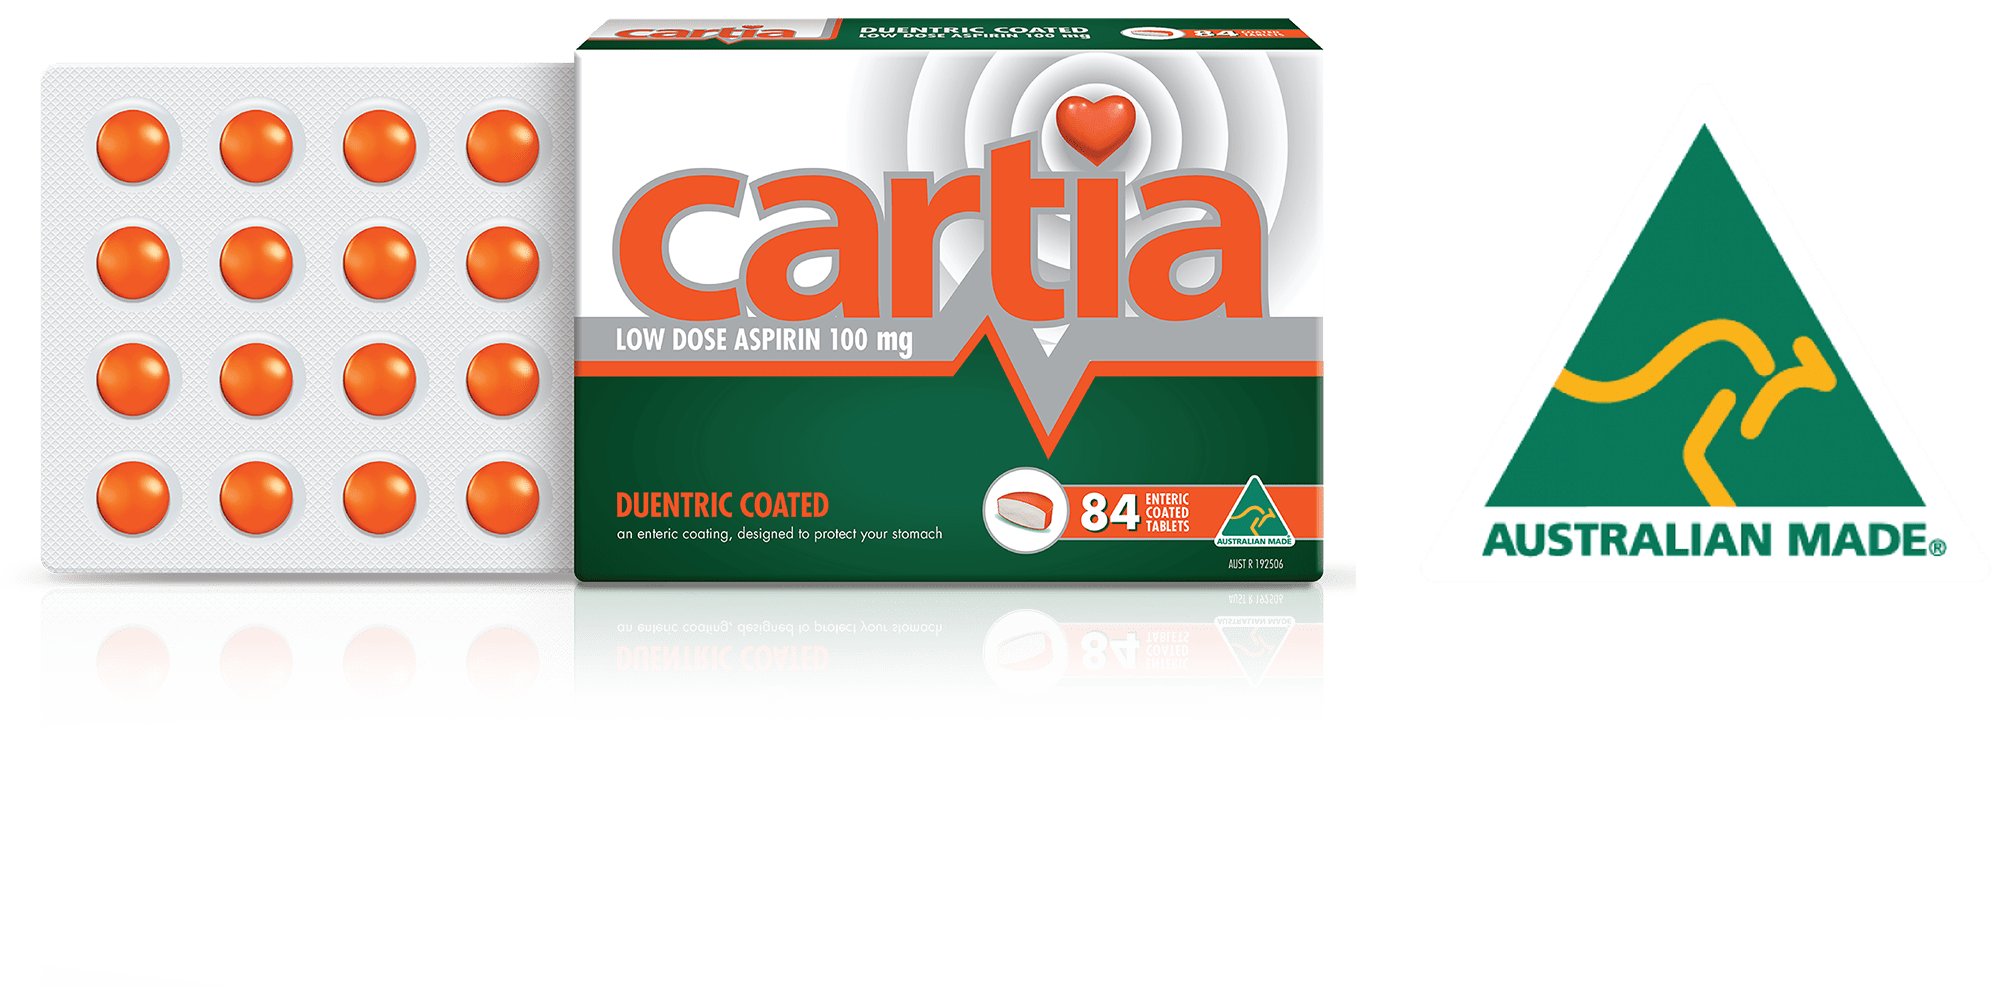 Duentric coated, low-dose aspirin Cartia tablet pack, Cartia box, and Australia Made logo